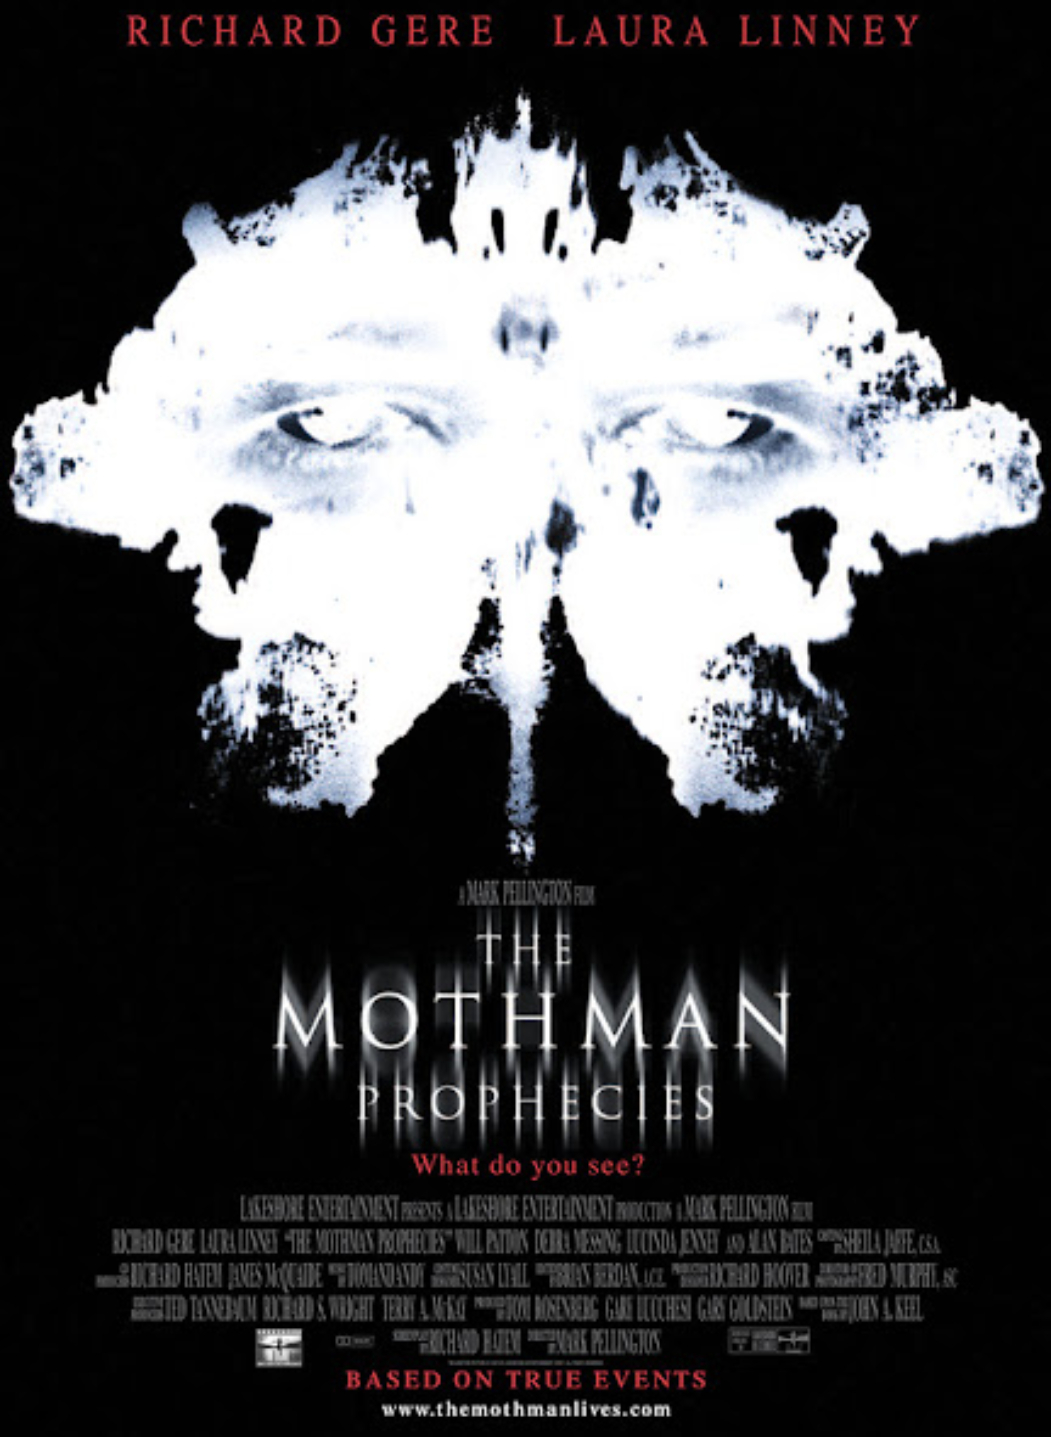 The Mothman Prophecies: Η αληθινή ιστορία πίσω από τον θρύλο που έγινε ταινία με τον Richard Gere